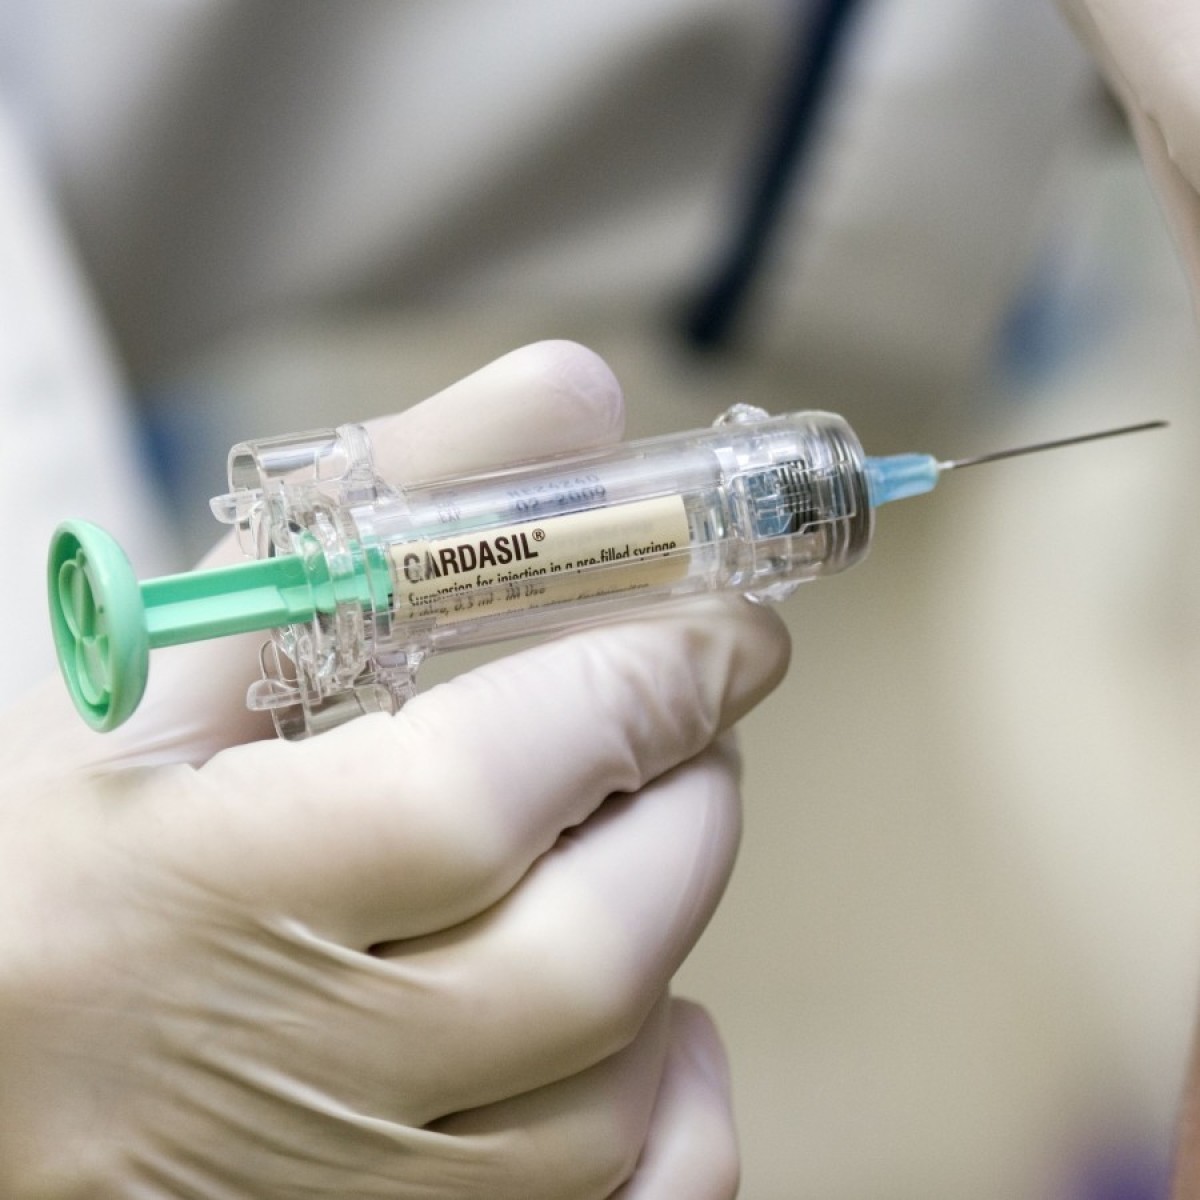 «Прививкой от жизни веселой» назвал Шнуров вакцину против Ковида